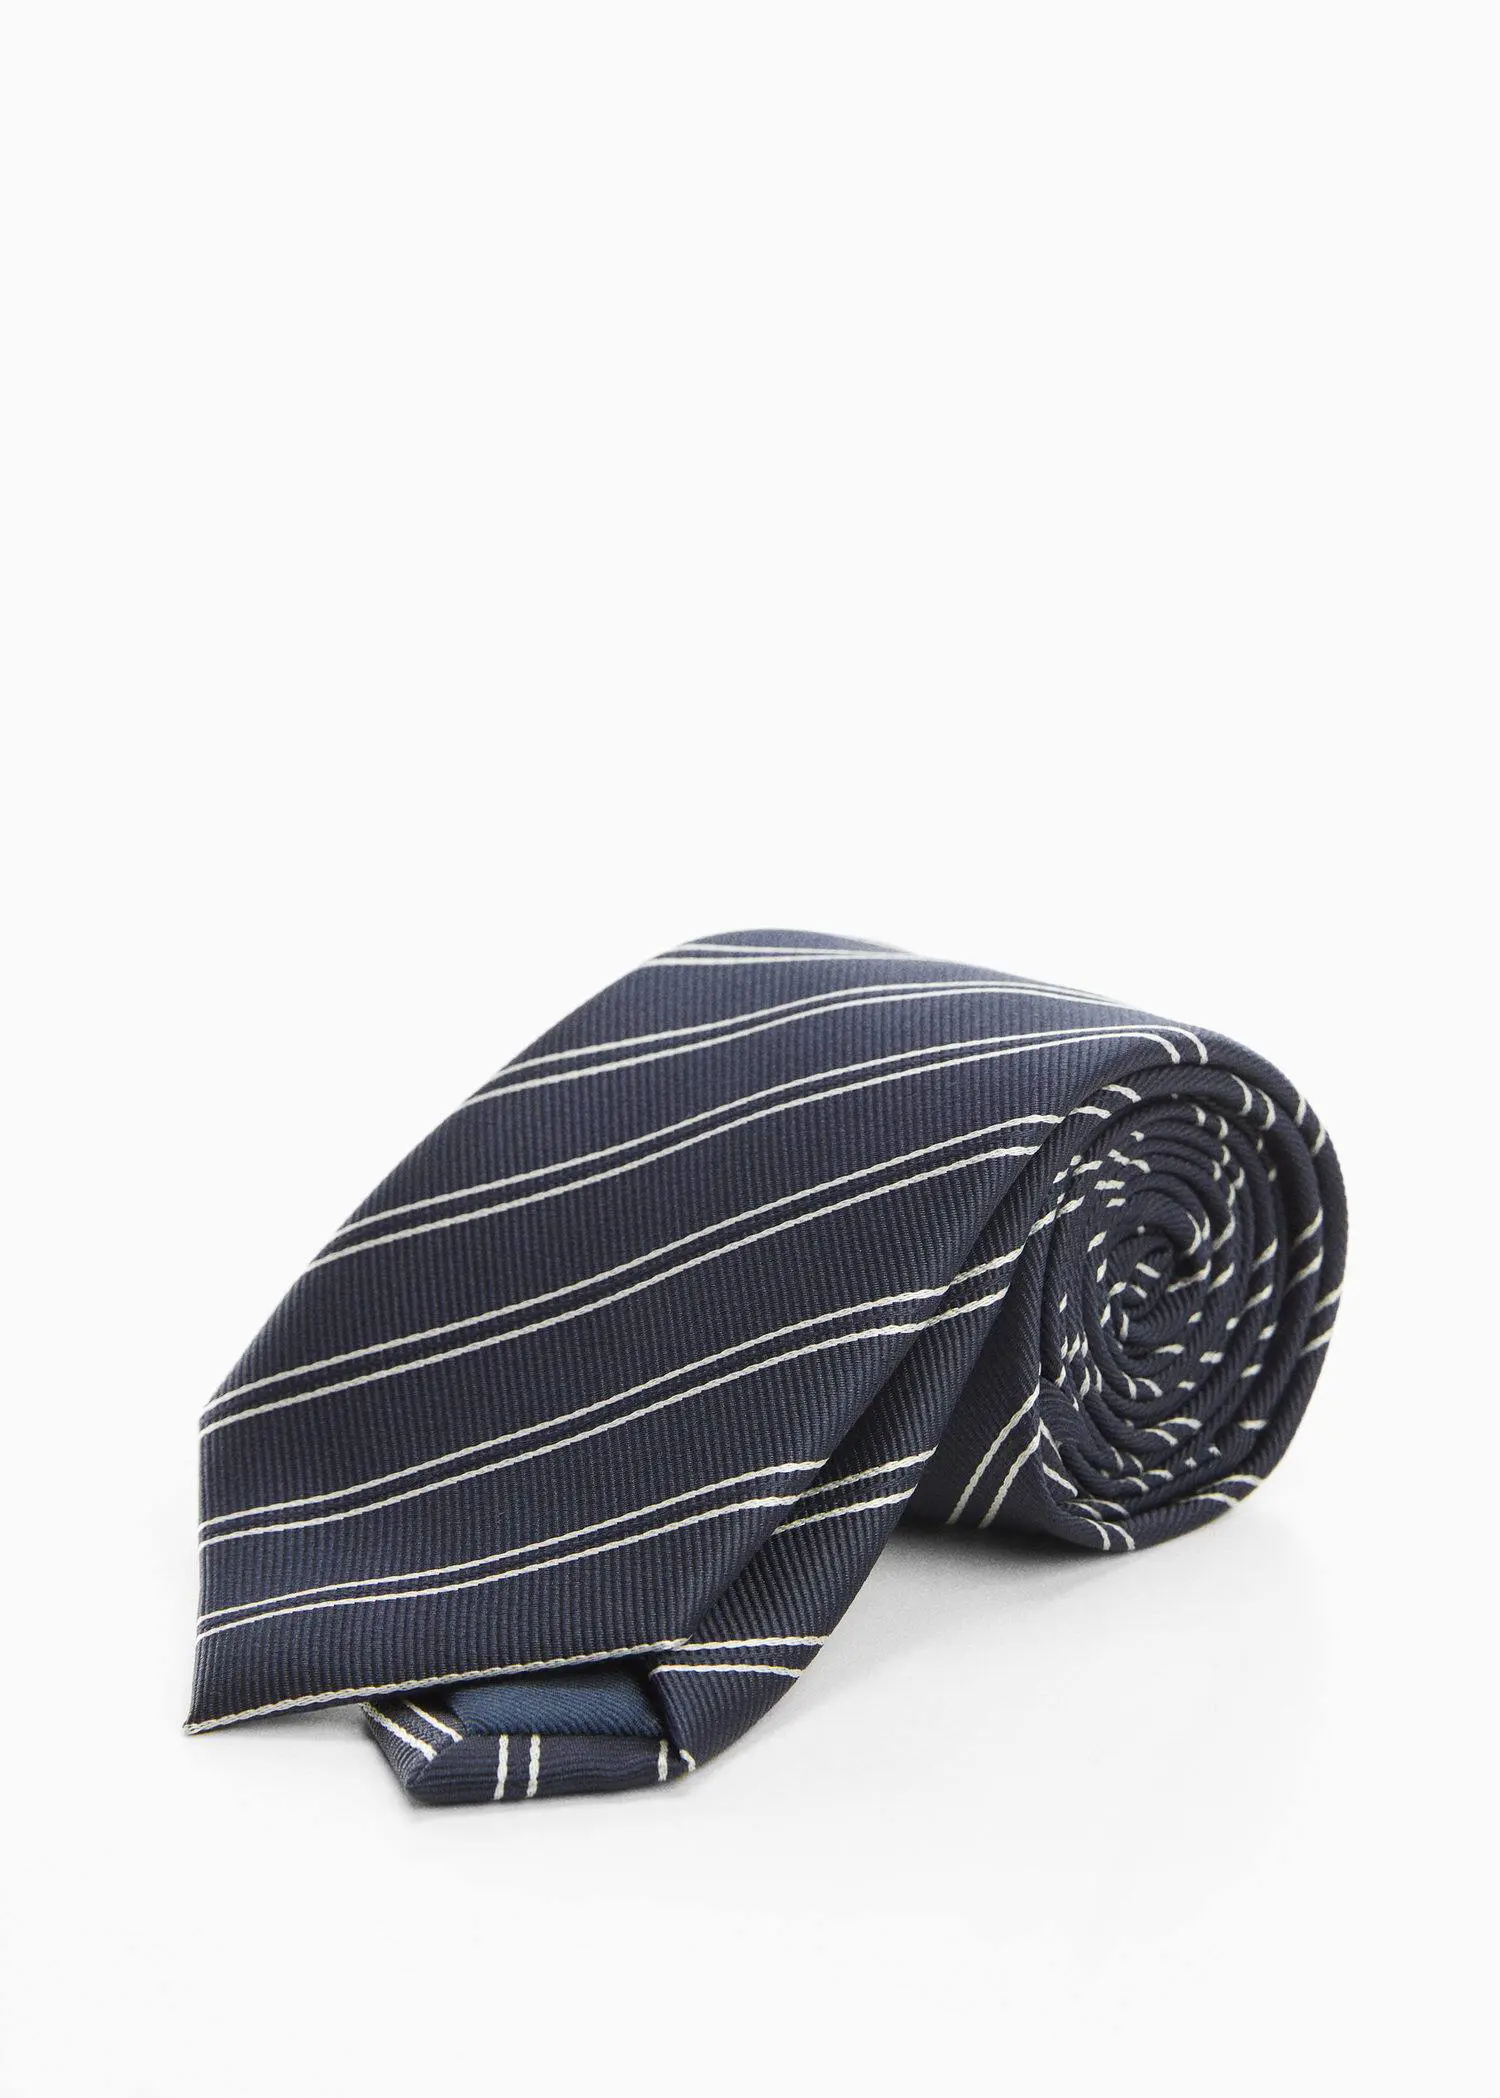 Mango Stain-resistant striped tie. 2